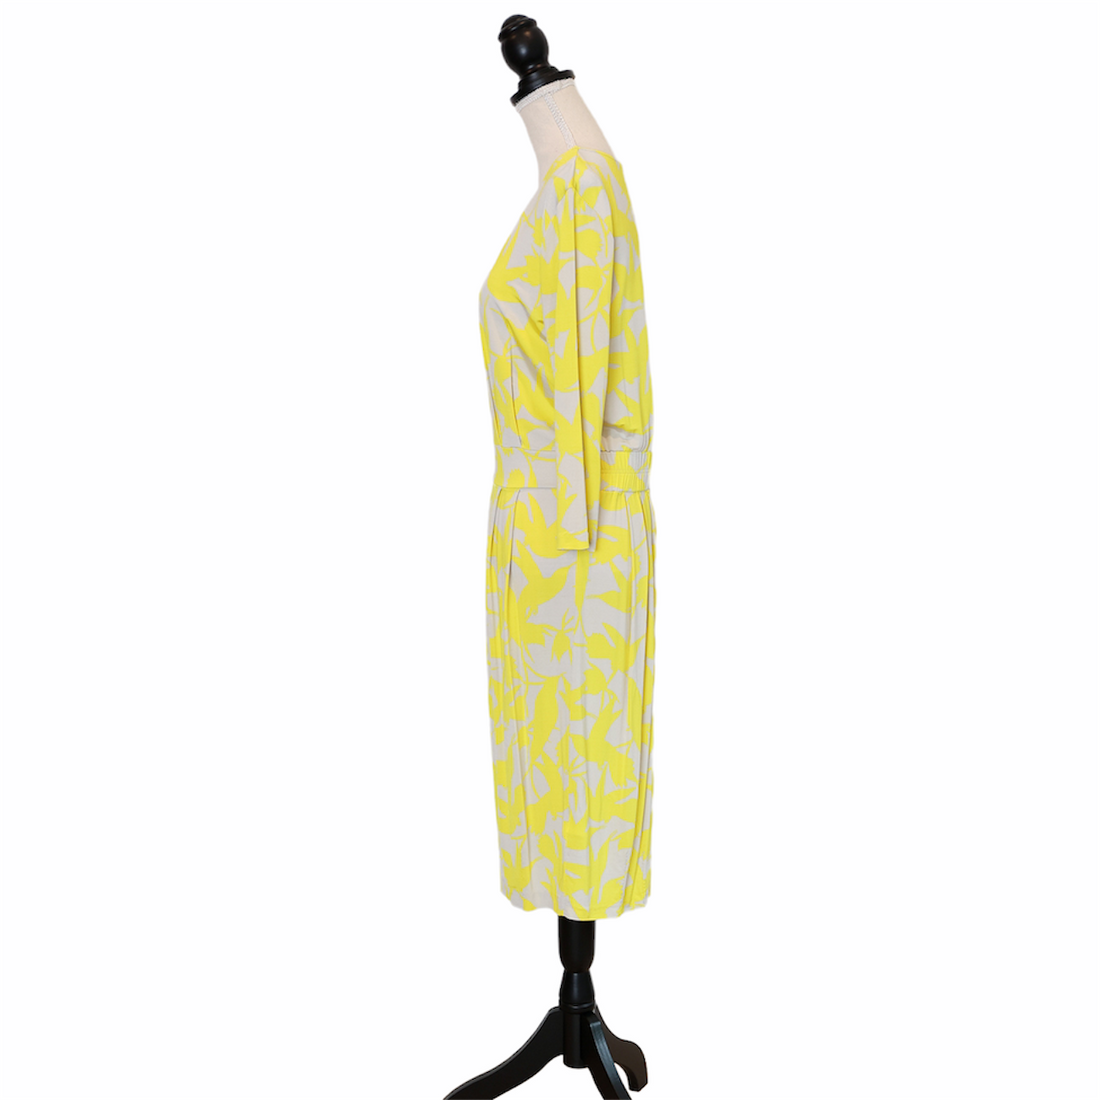 Iris by Armin Jersey dress with a bird print